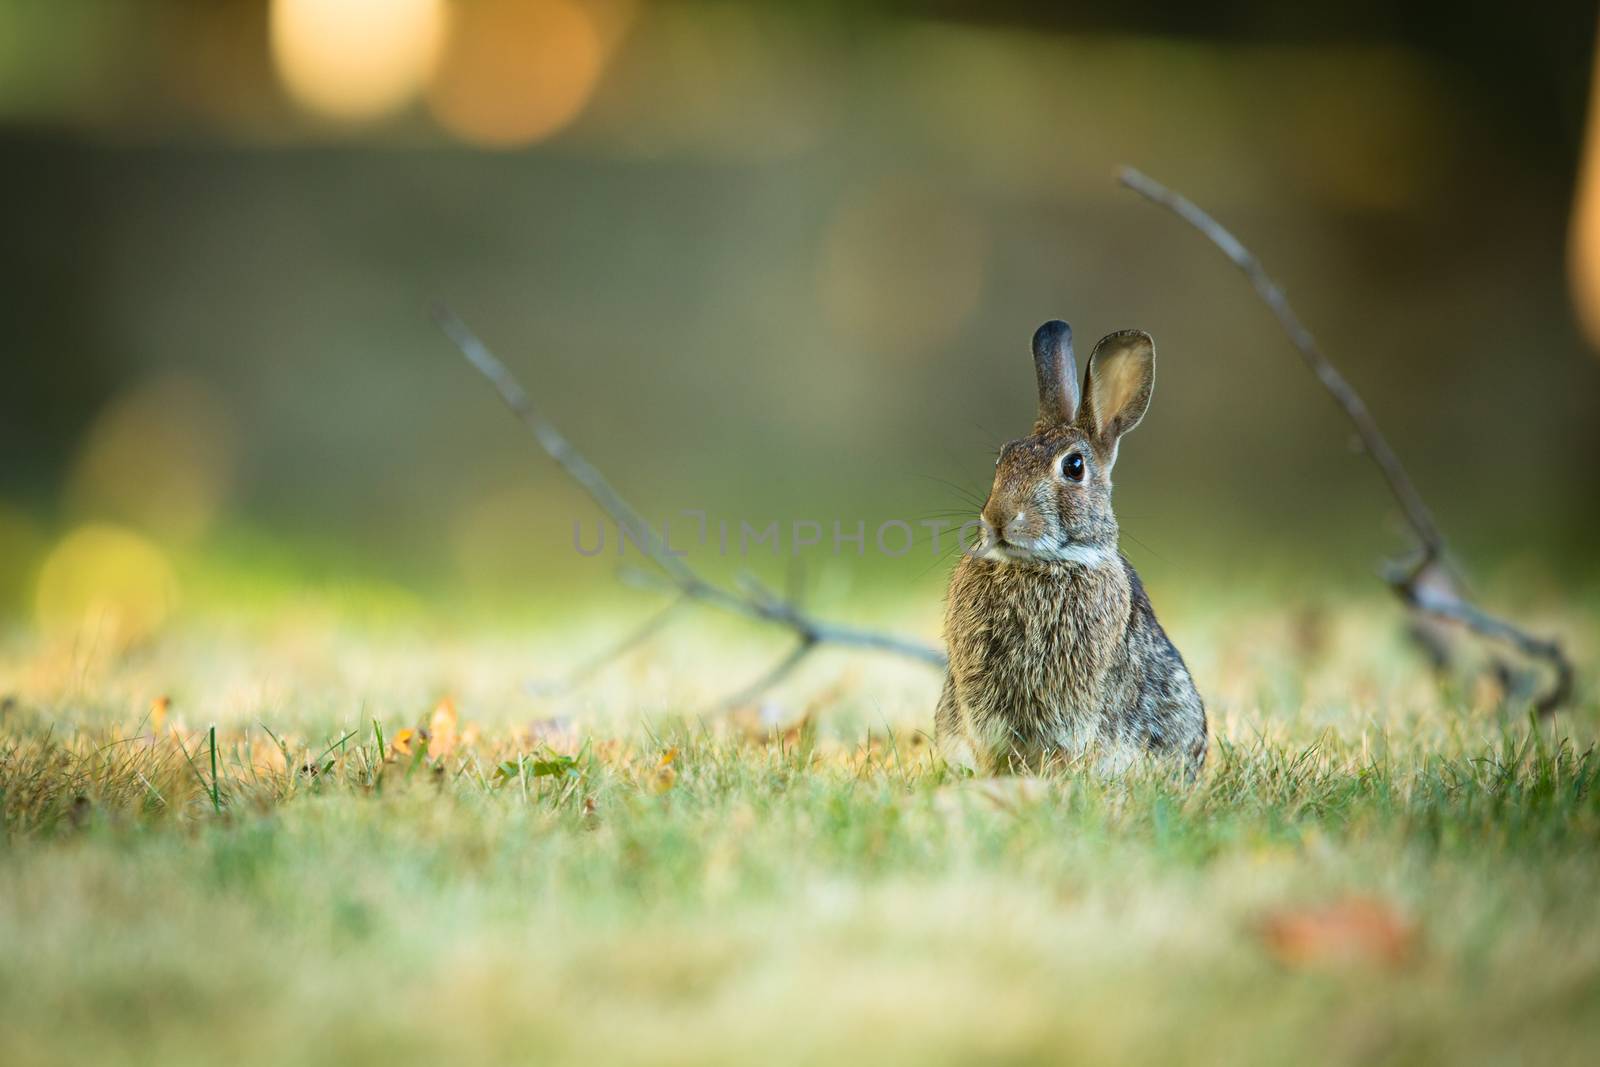 Cute rabbit in grass